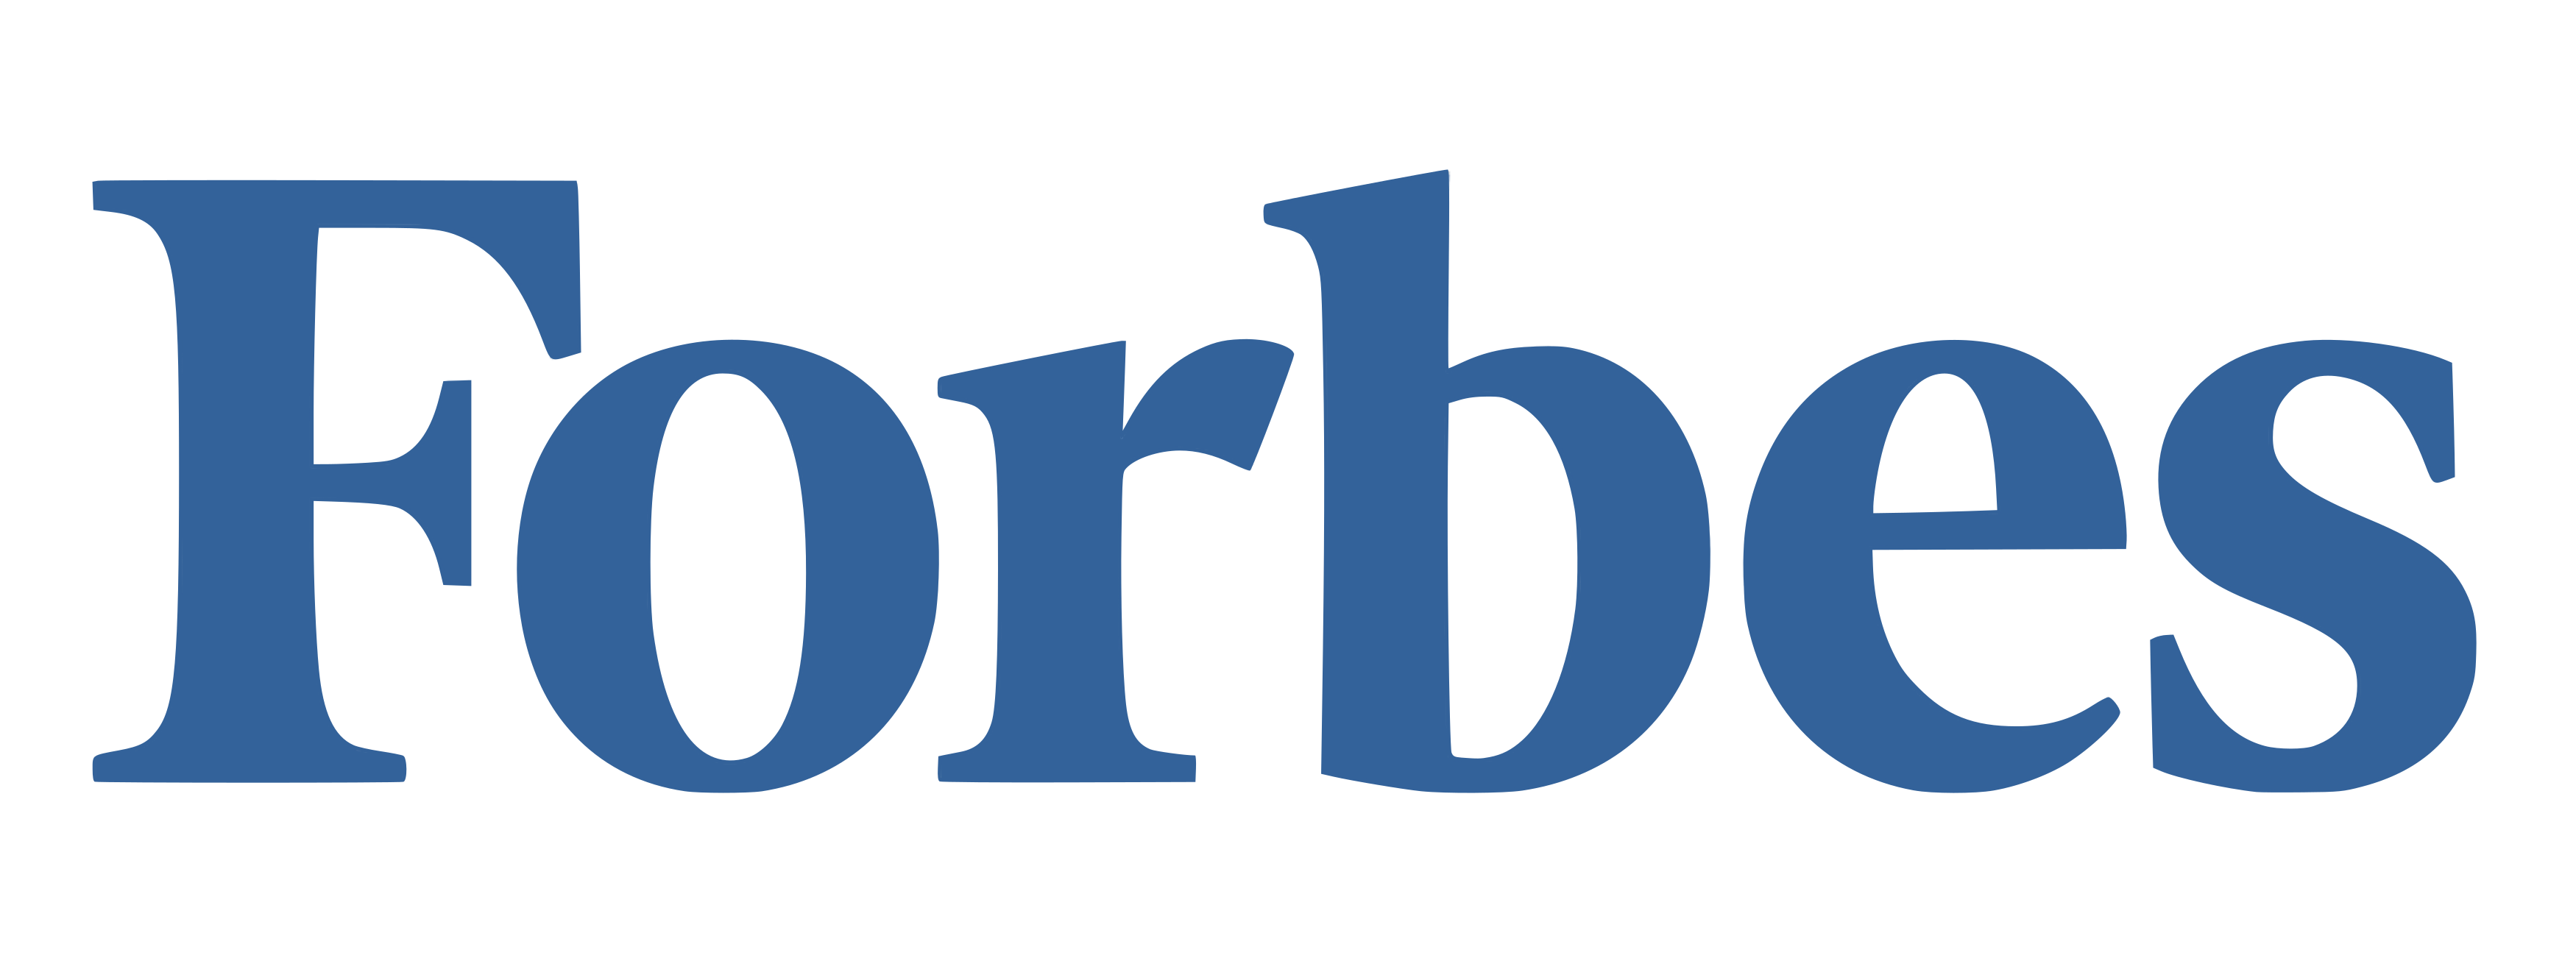 Forbes-black-logo-png-03003-e